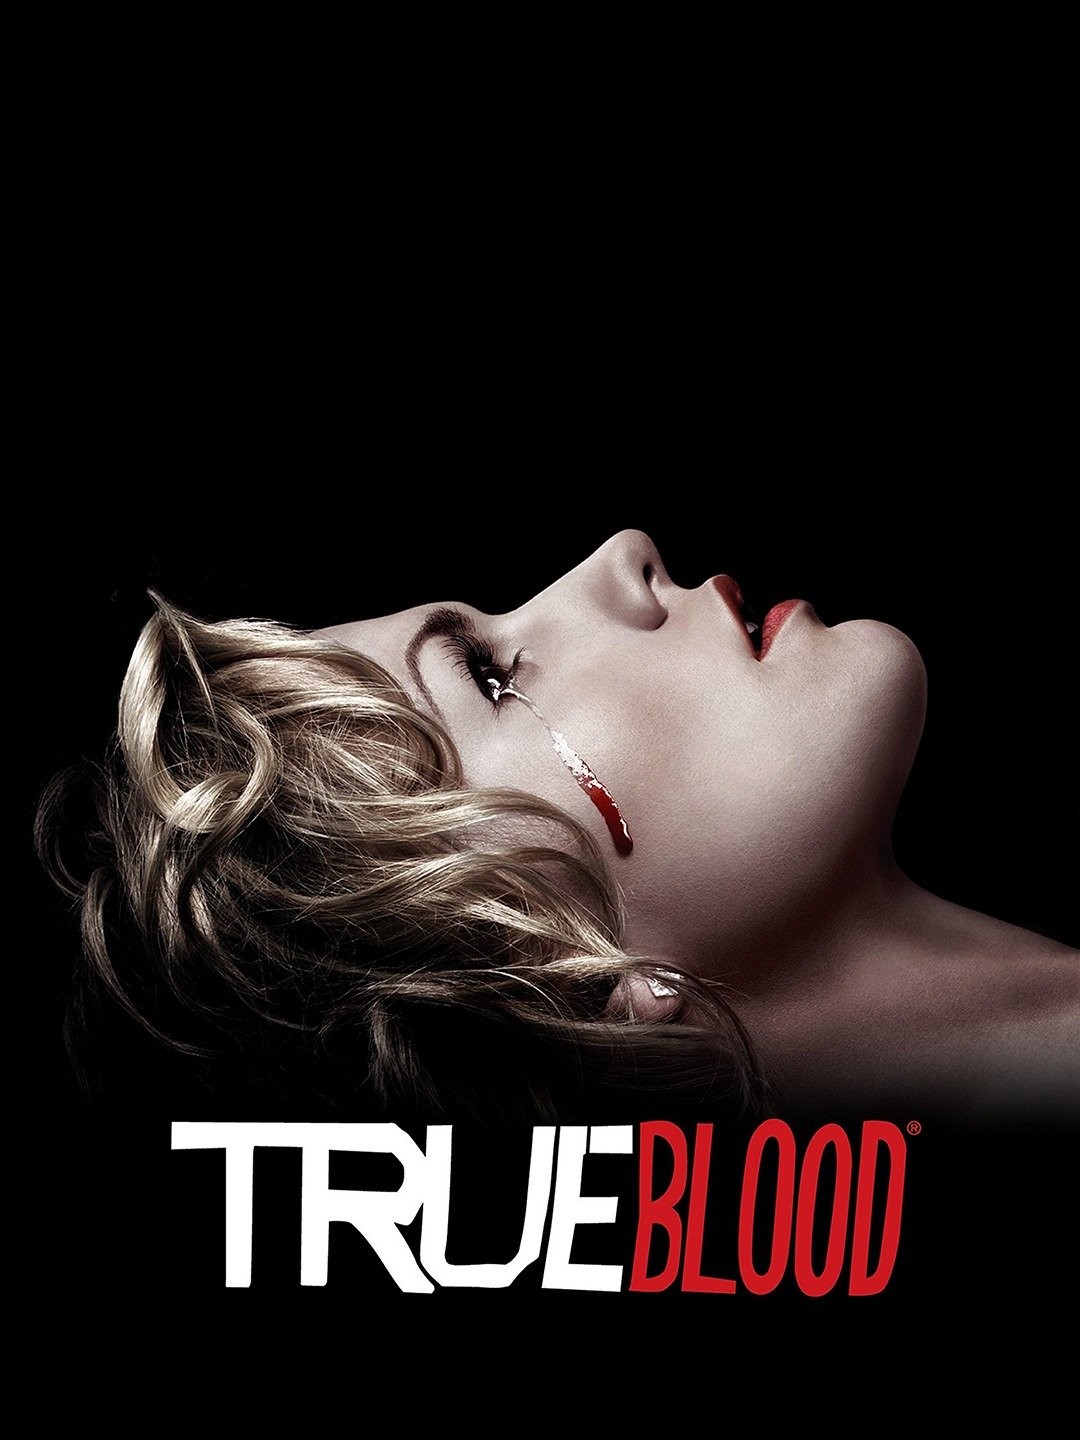 ana delia perez recommends watch true blood online season 1 pic